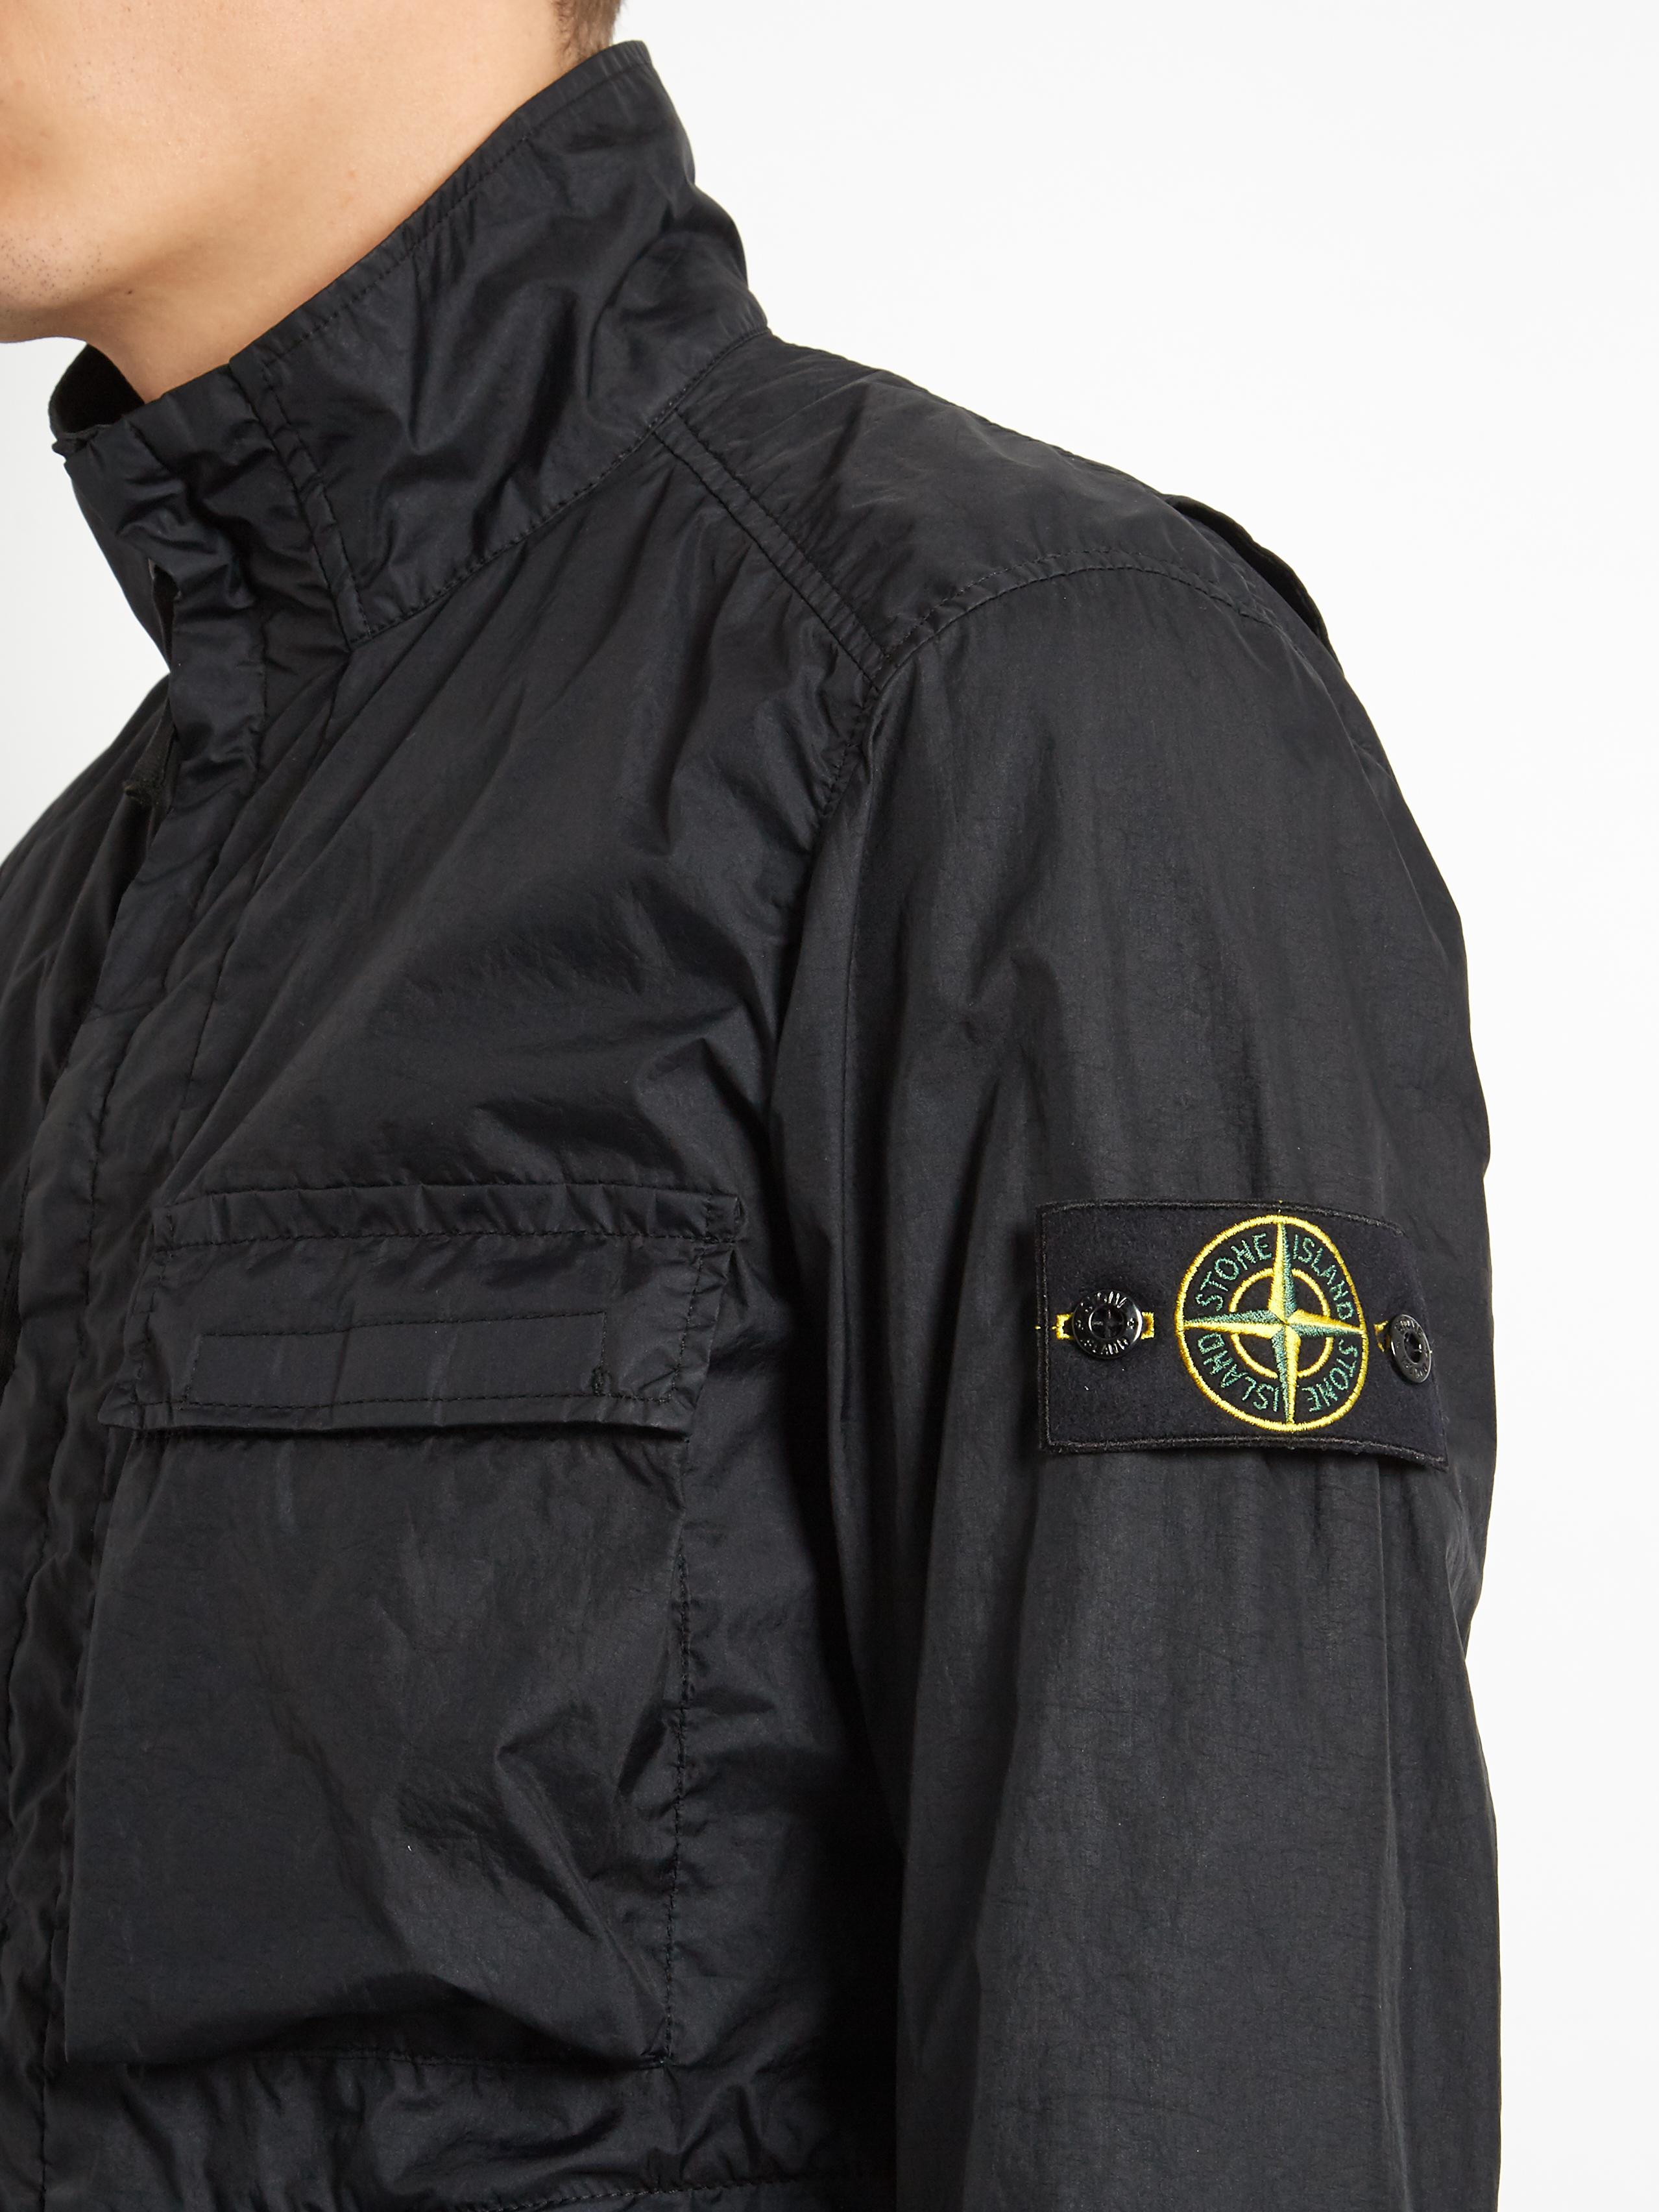 Lyst - Stone Island Membrana 3l Tc Lightweight Jacket in Black for Men